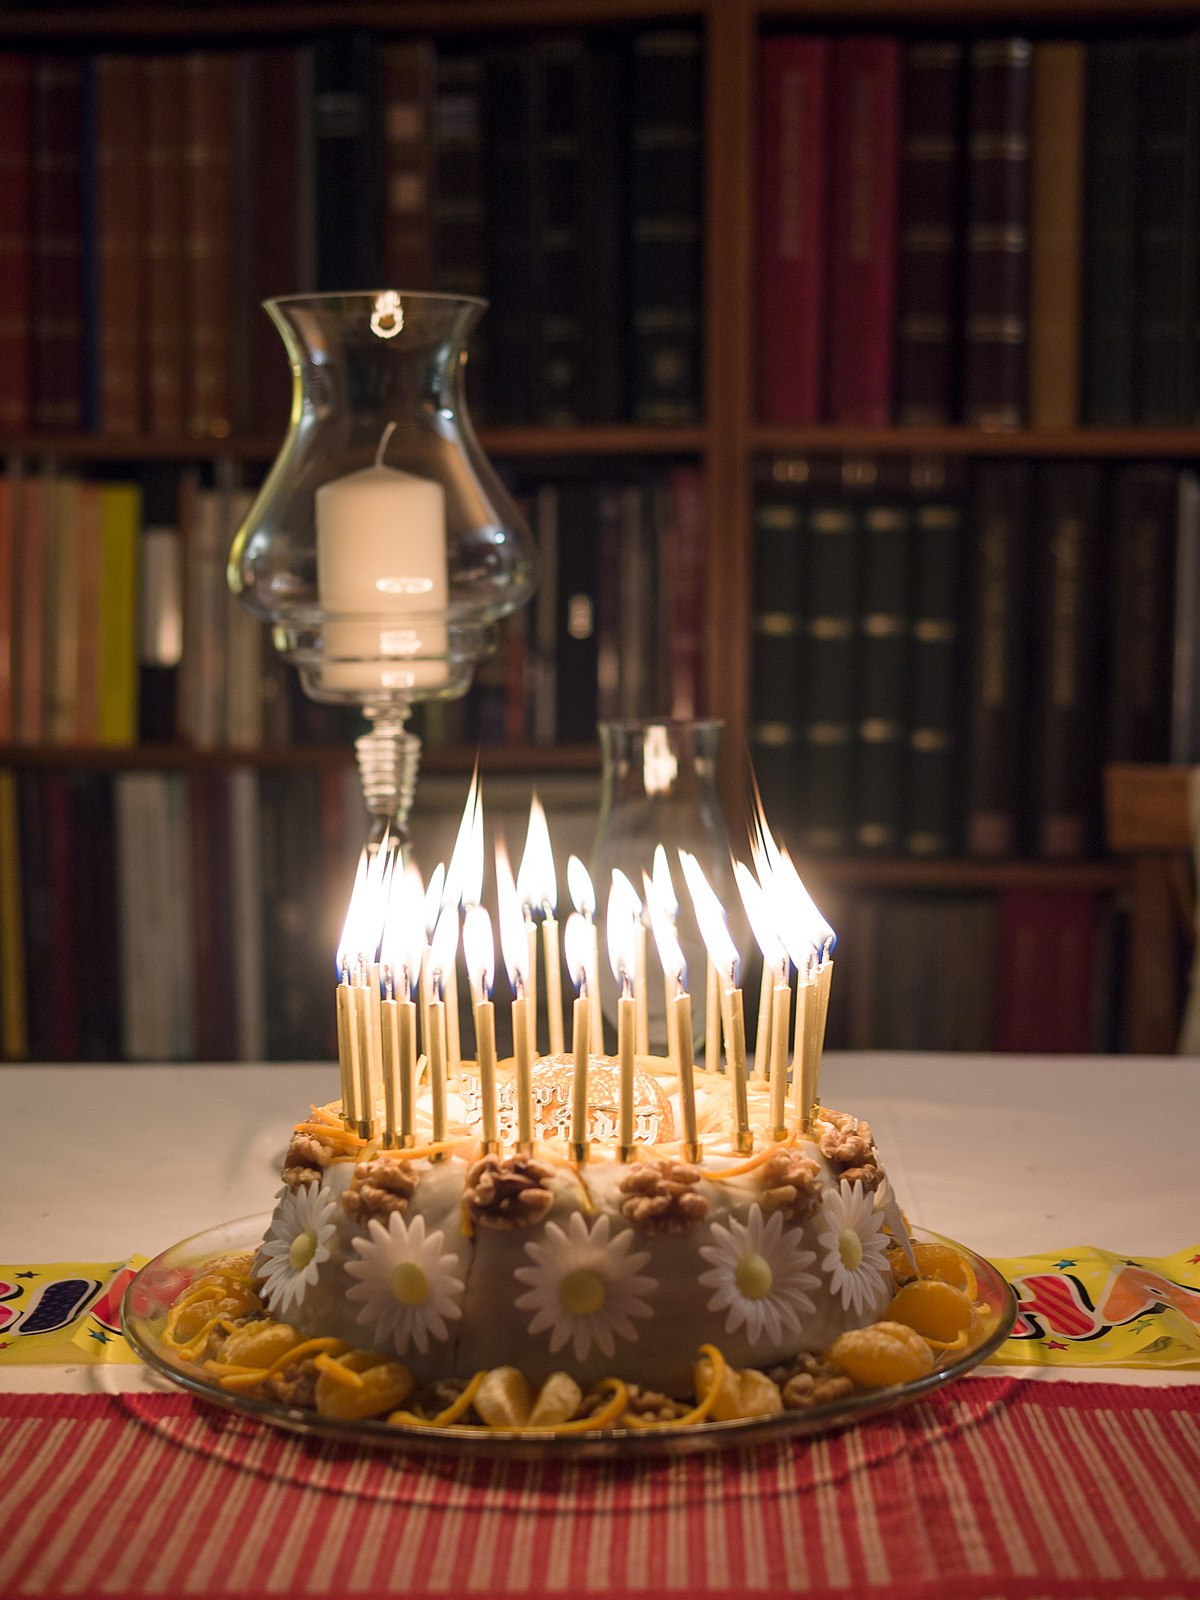 Free Pictures Of Birthday Cakes
 Birthday cake